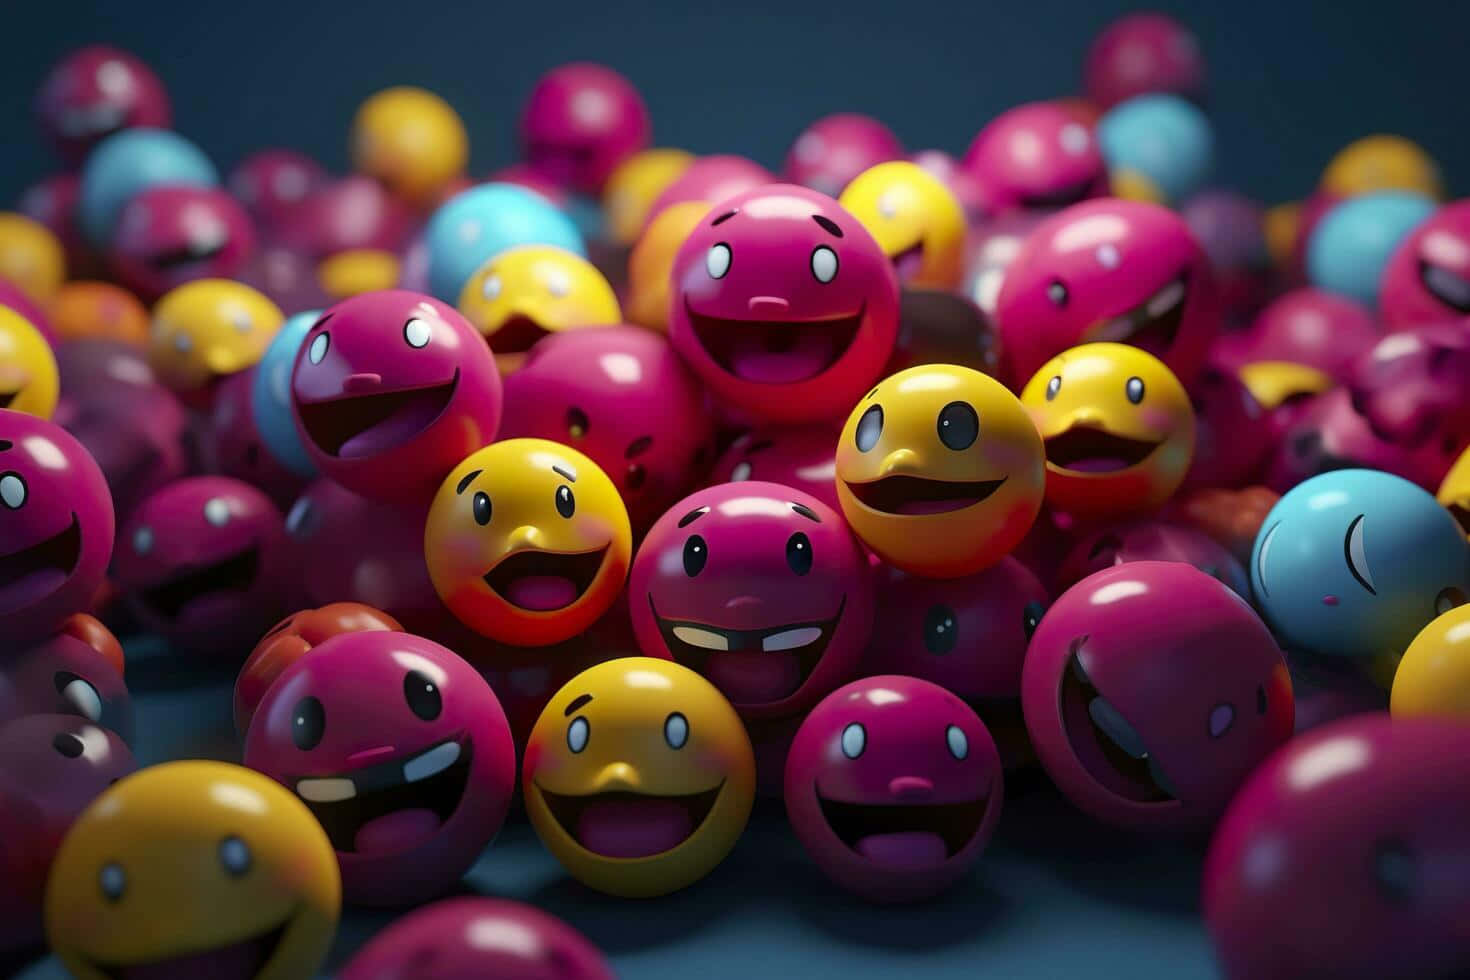 Colorful Emoticon Balls Cluster.jpg Wallpaper